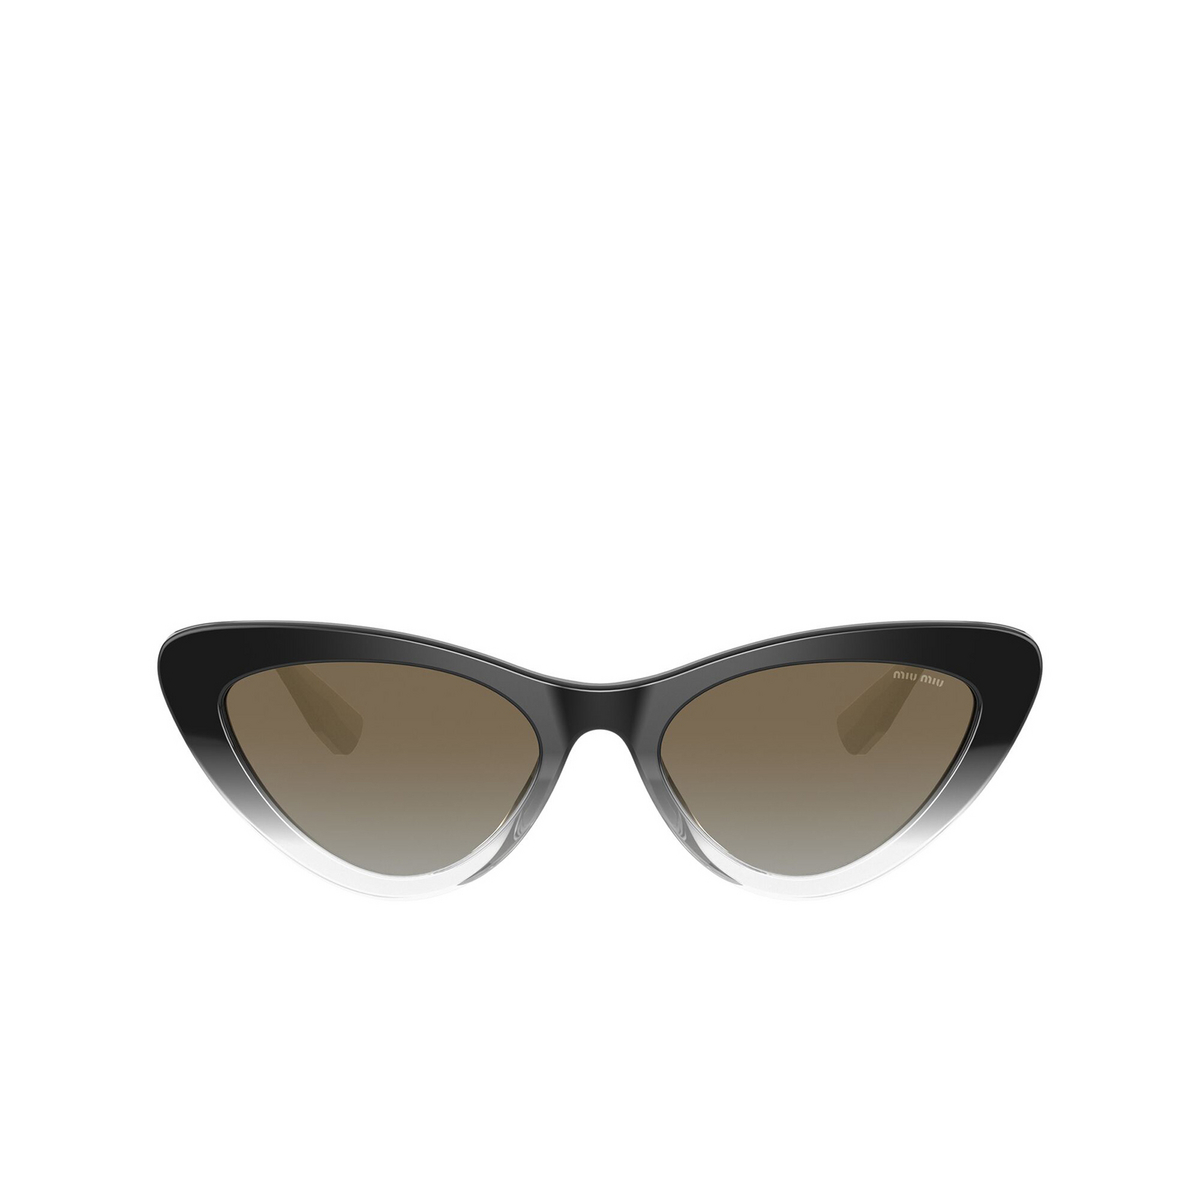 Miu Miu® Cat-eye Sunglasses: MU 01VS color Black Gradient 1140A7 - front view.